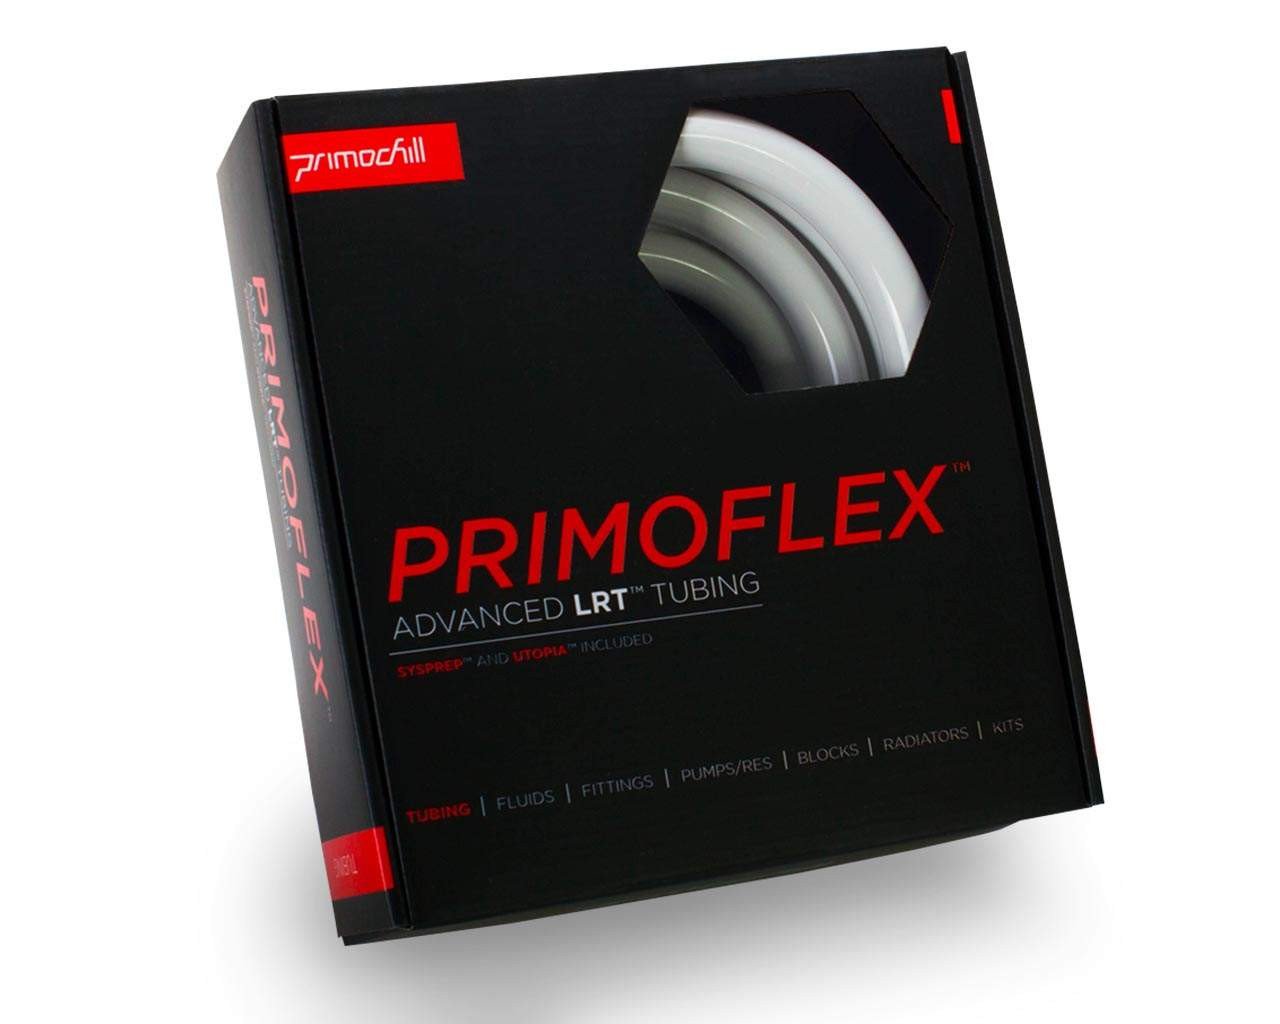 PrimoFlex Advanced LRT Soft Flexible Tubing -3/8in.ID x 5/8in.OD, 10 feet - PrimoChill - KEEPING IT COOL Elegant White